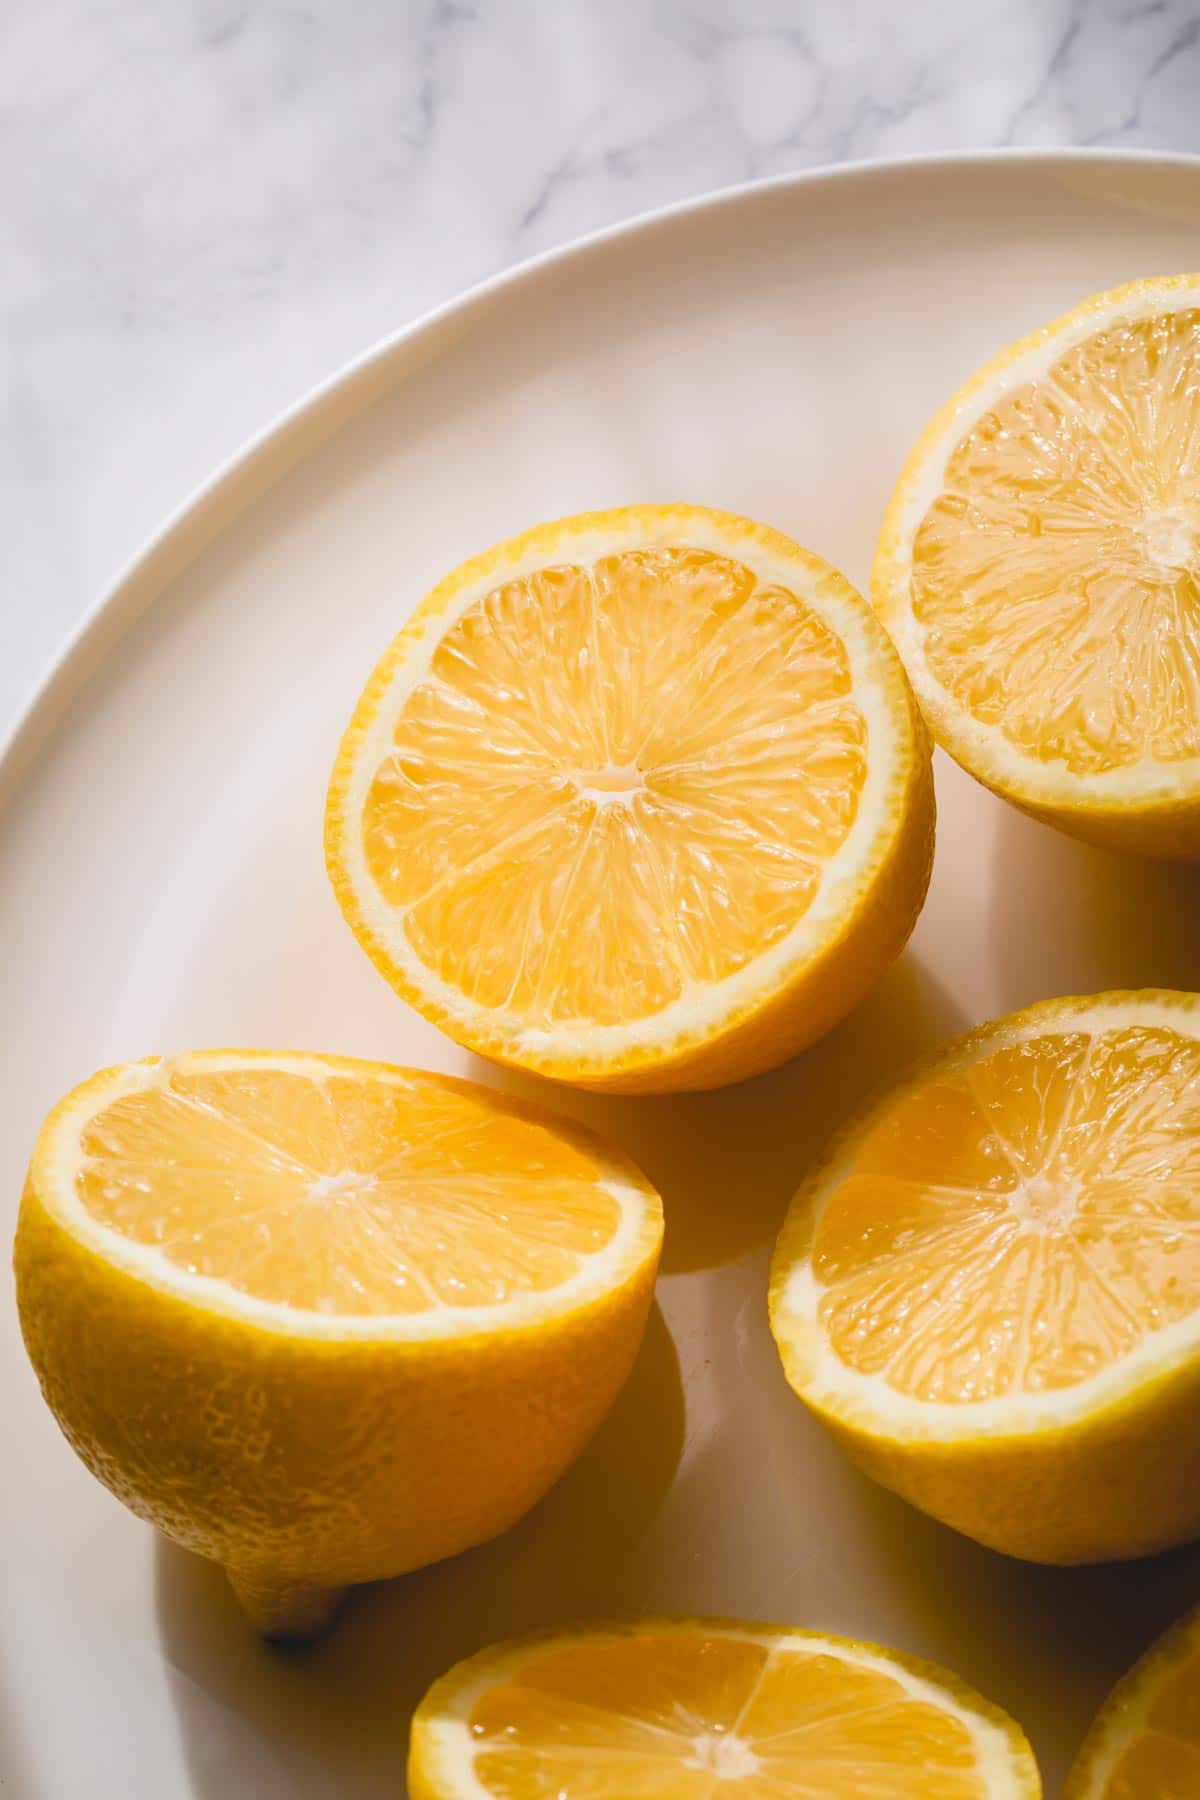 Lemon halves on a white plate.